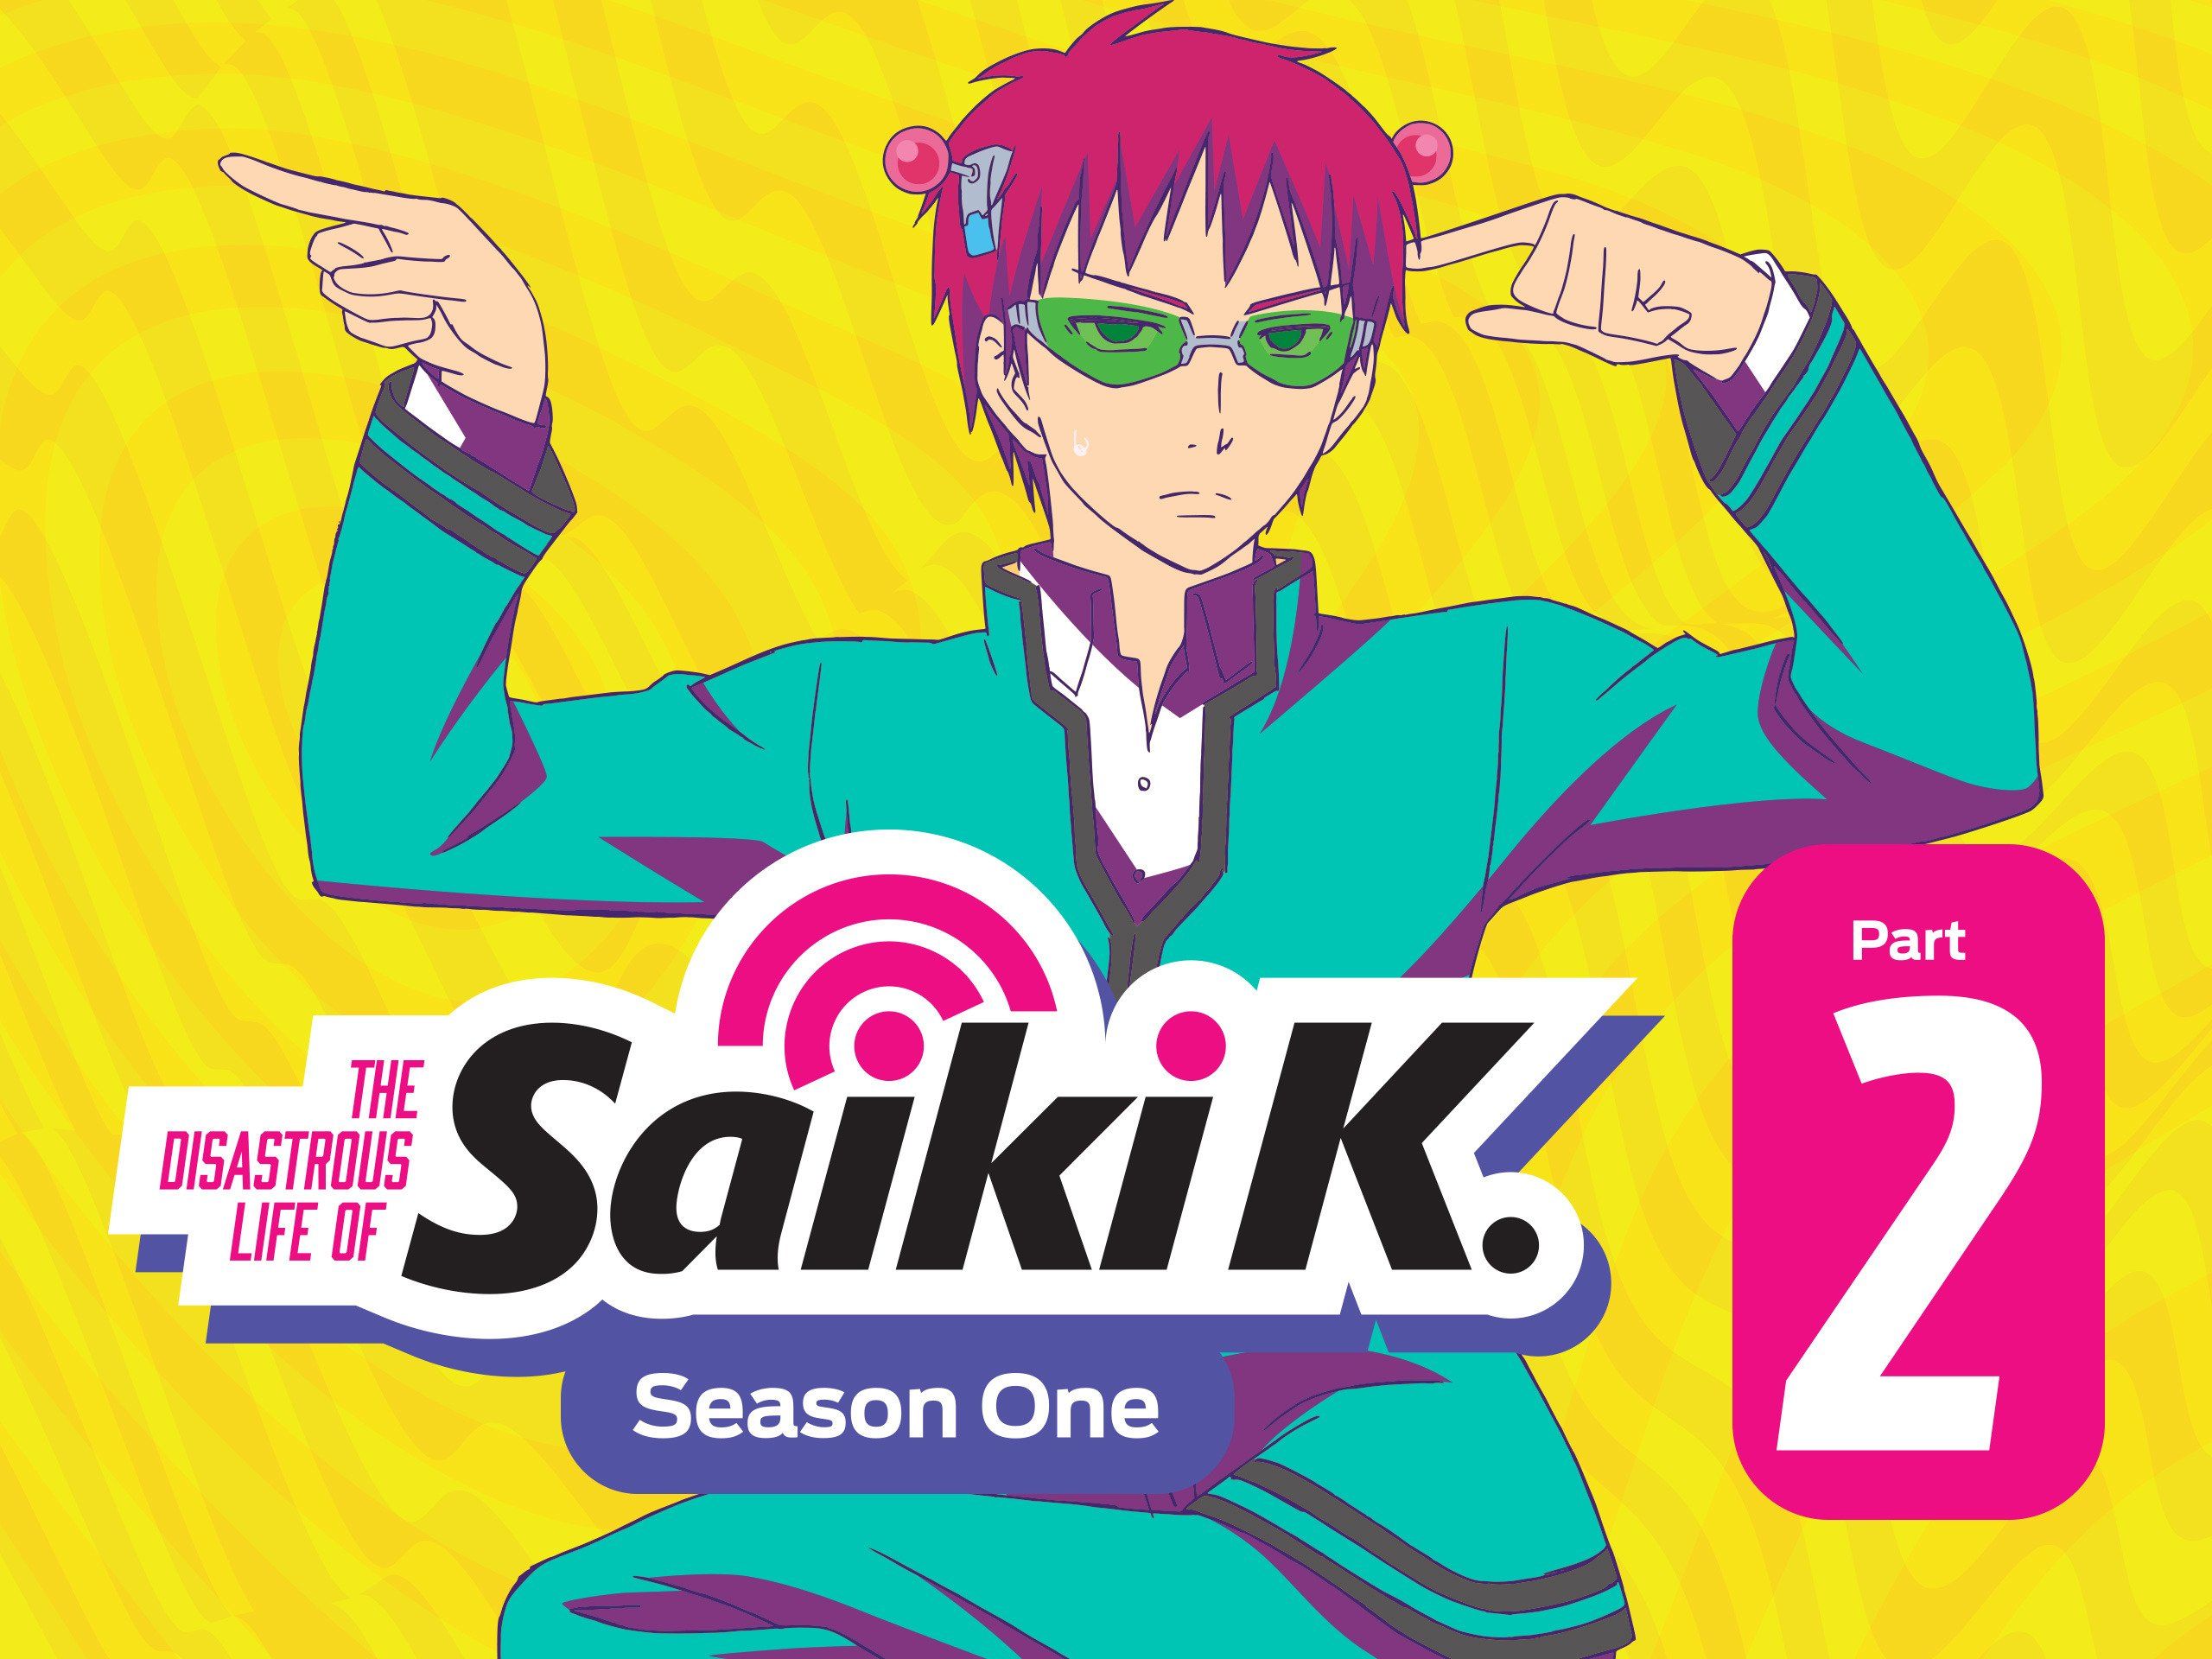 Watch The Disastrous Life of Saiki K, Season 1, Pt. 